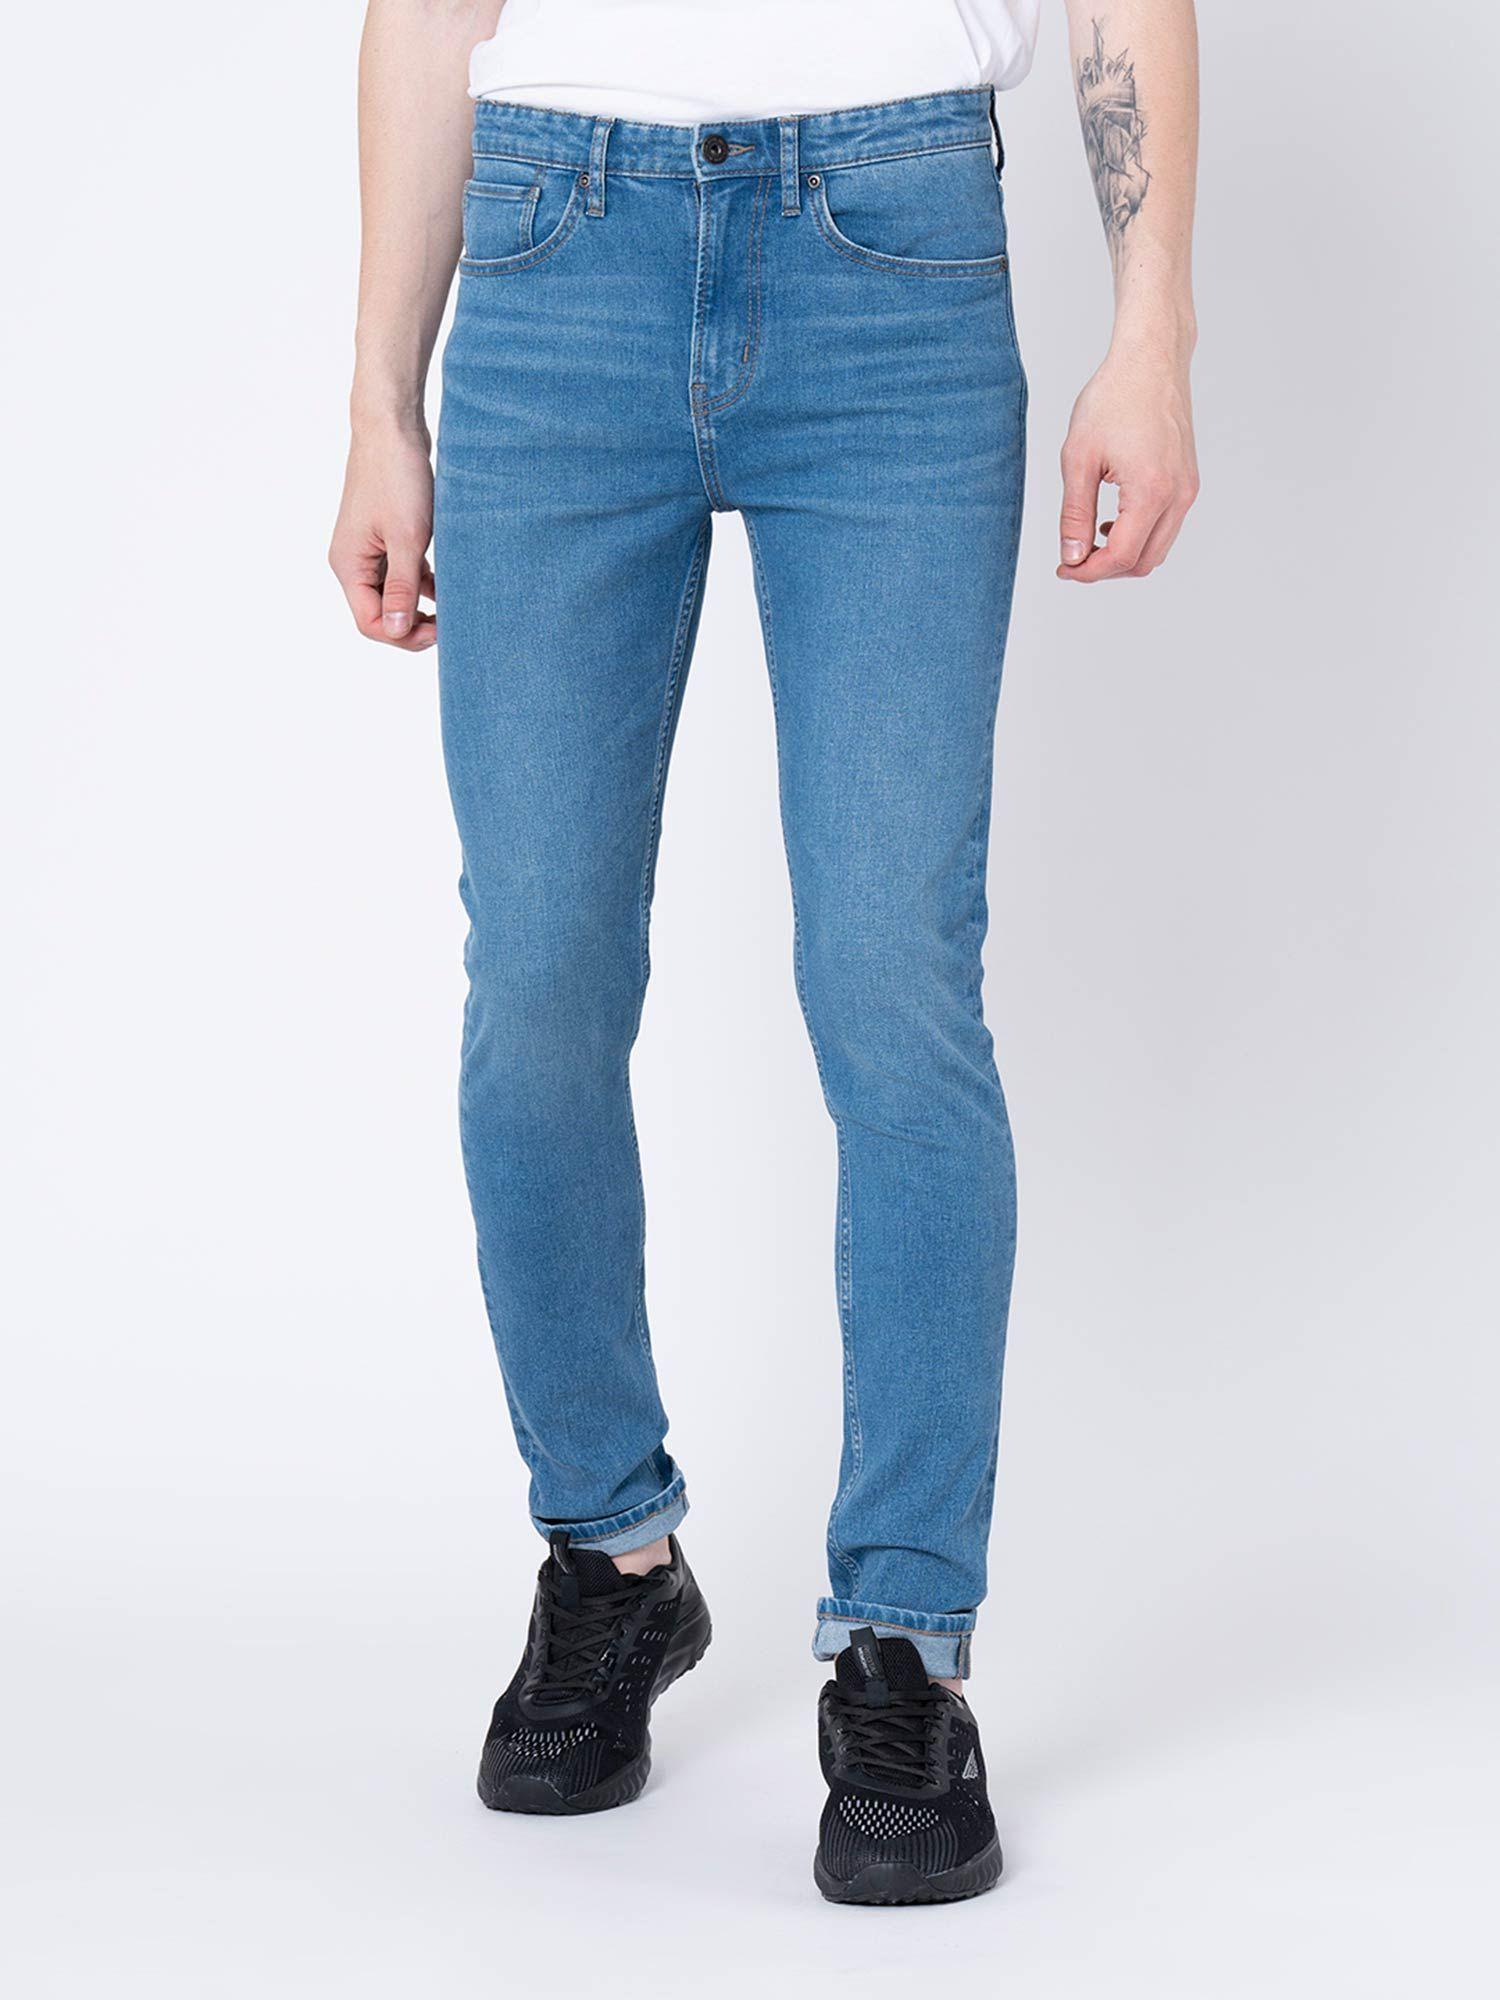 mens-mid-blue-skinny-jeans